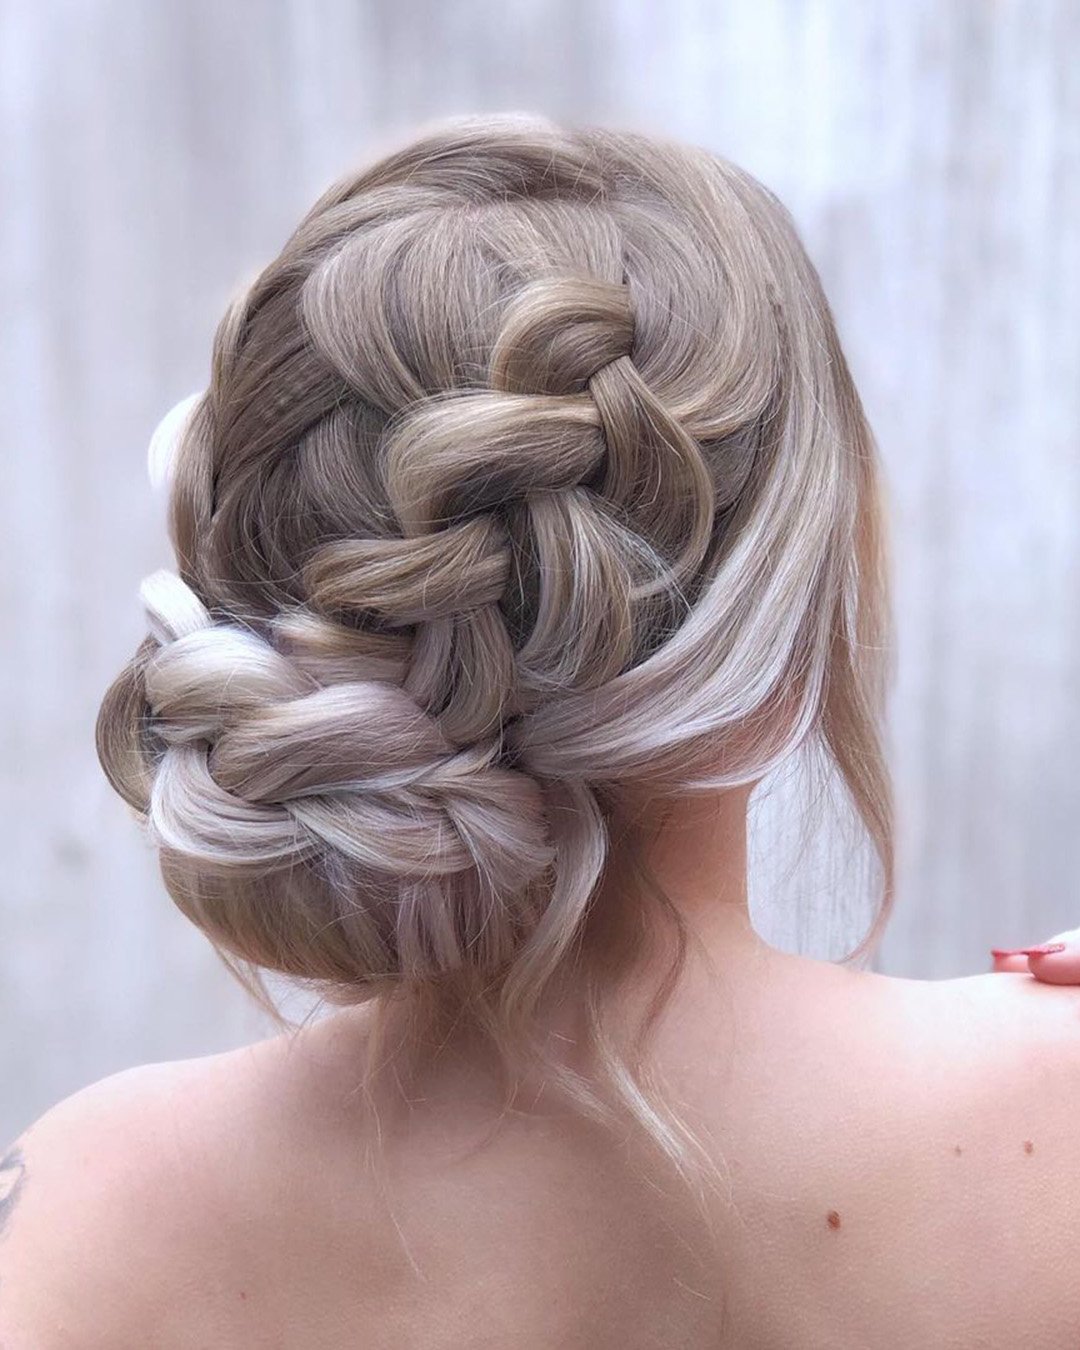 bridesmaid hairstyles wedding hair low bun with braids natalymirandahair